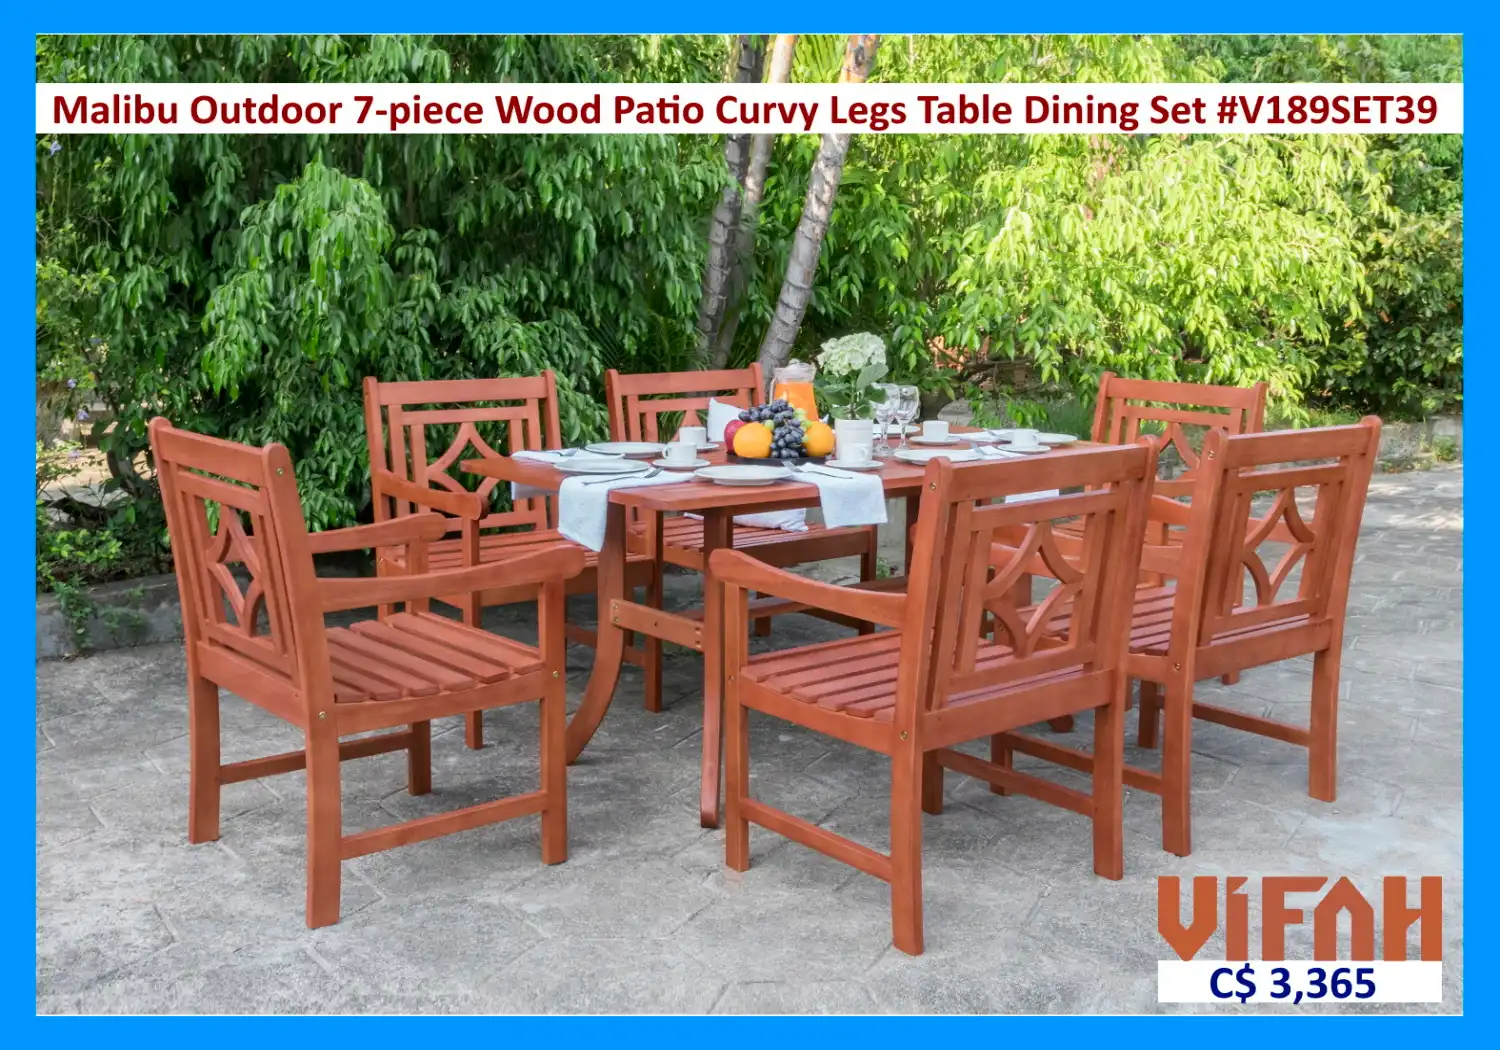 MALIBU Outdoor #V189SET39 7-piece Wood Patio Curvy Legs Table Dining Set